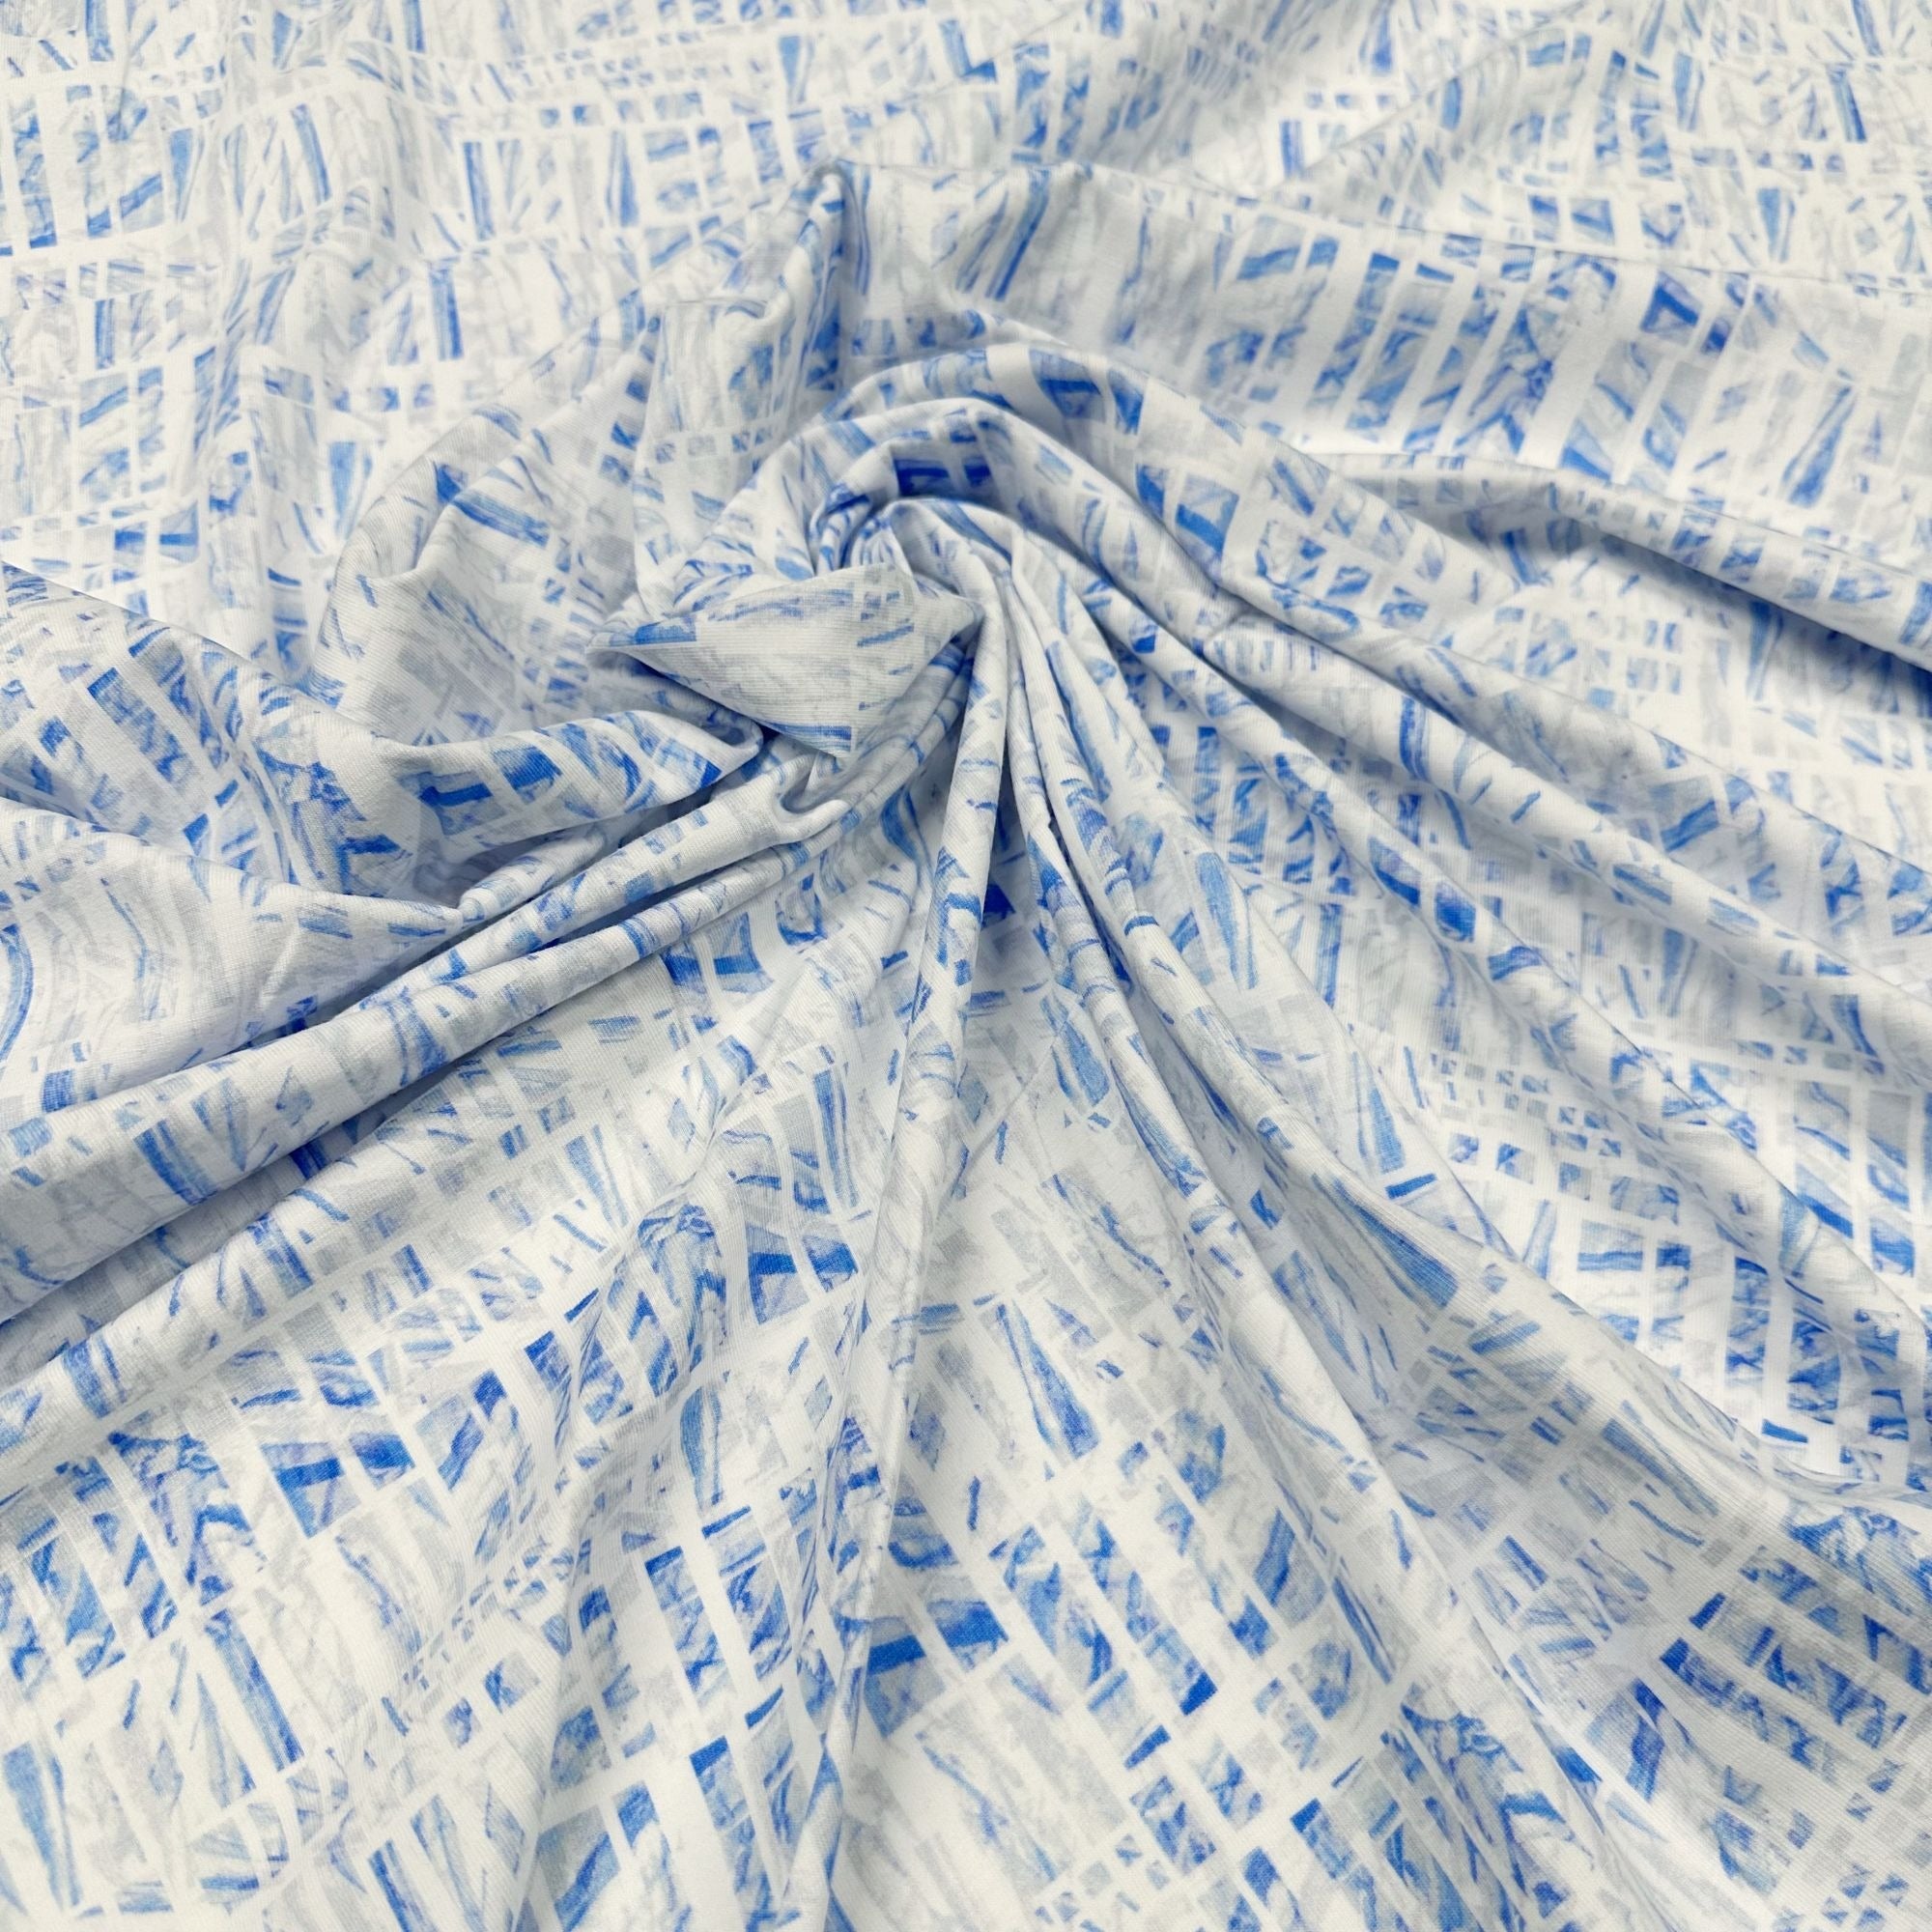 Wishwell Happy Hilltop Cotton Jersey Abstract Print Knit Stretch Fabric Robert Kaufman WELDKX-20772-277 WINTER